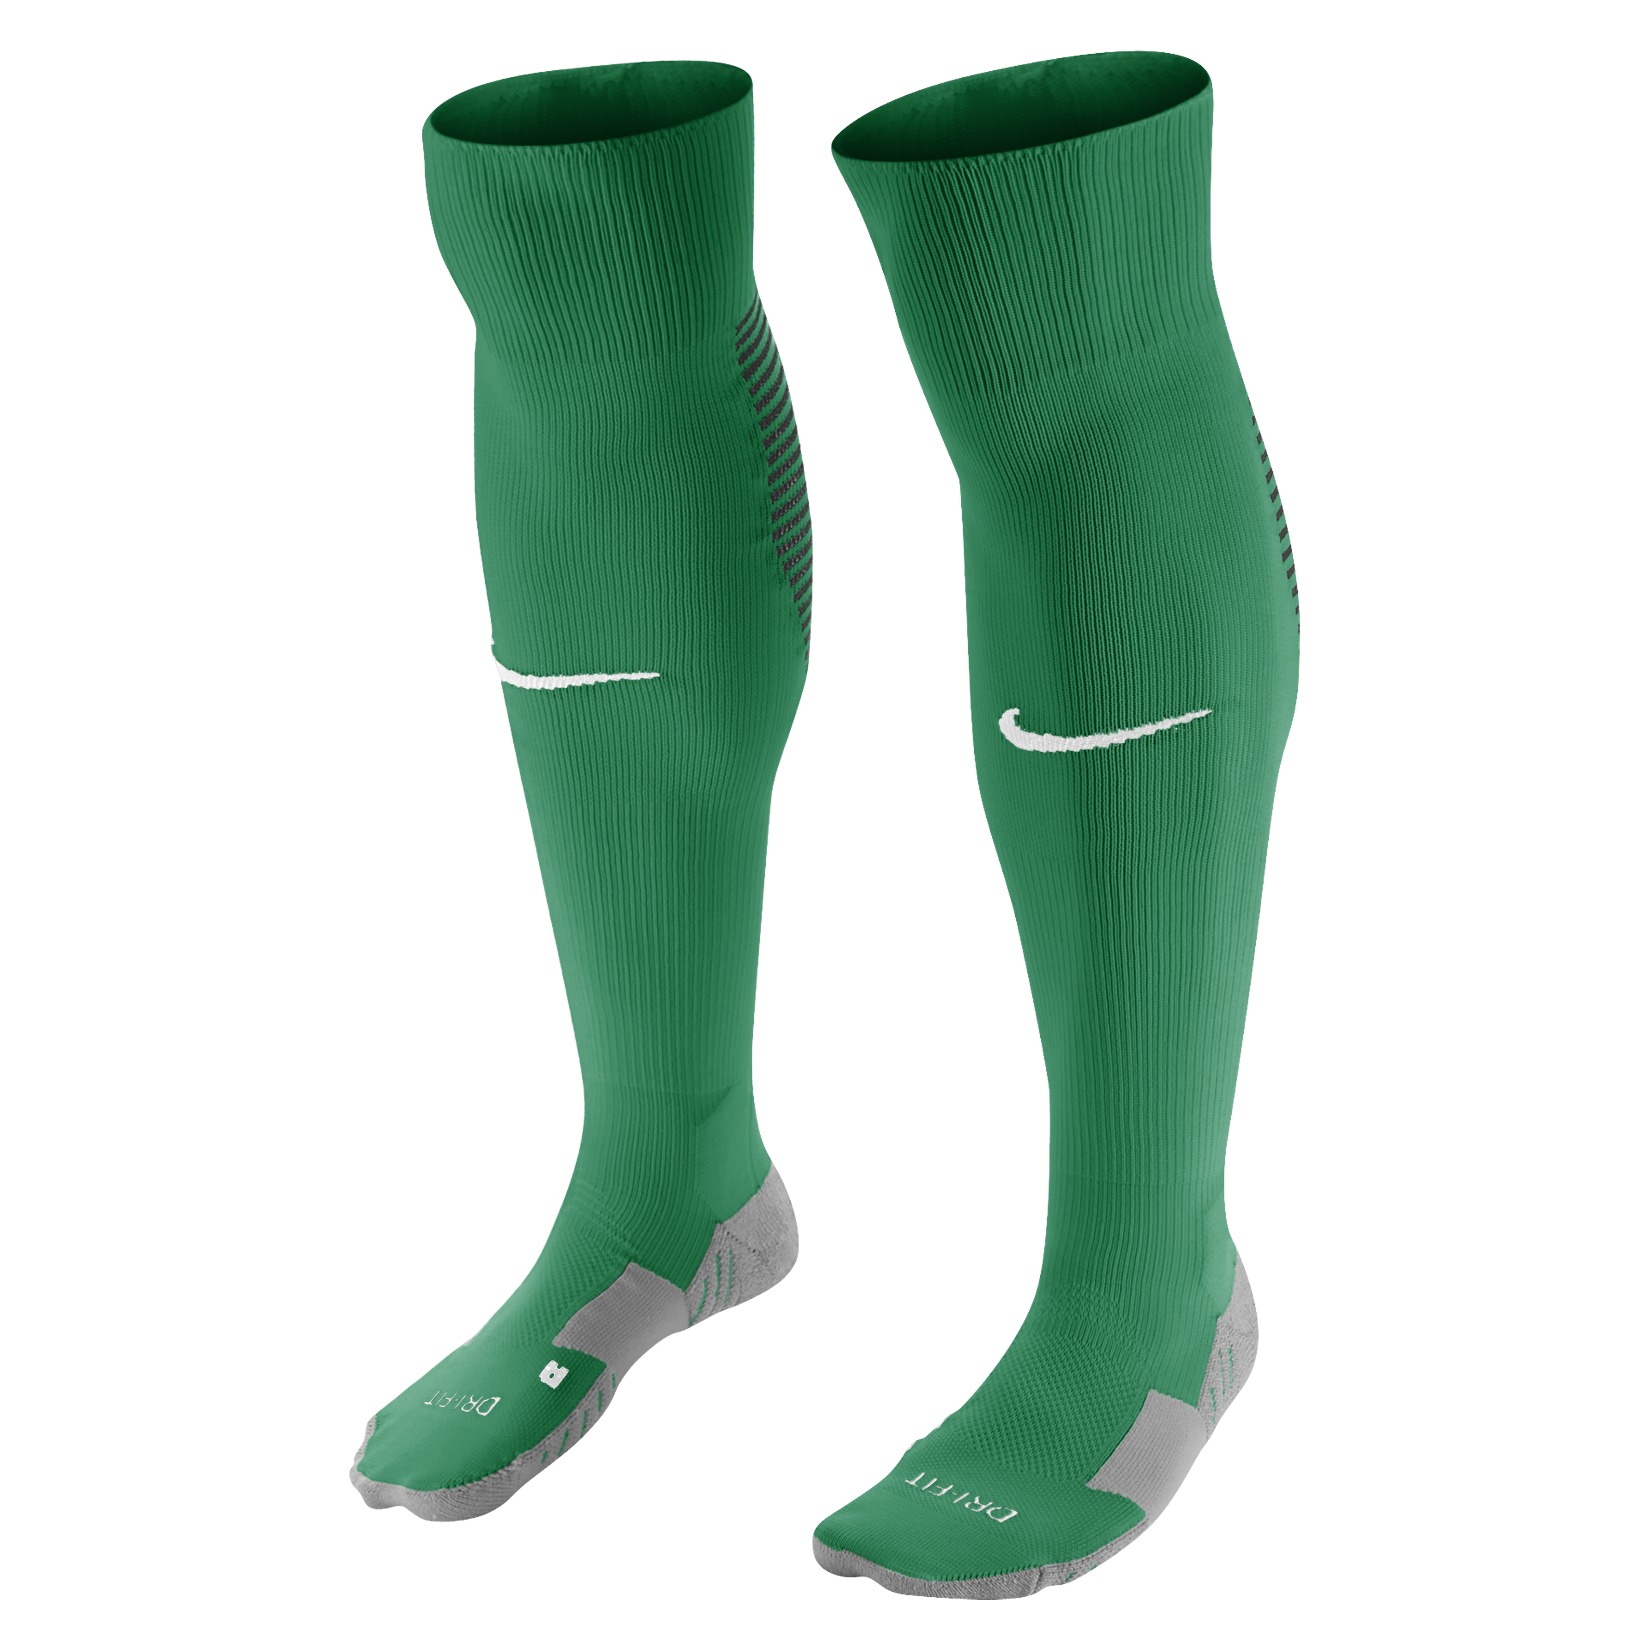 nike green football socks